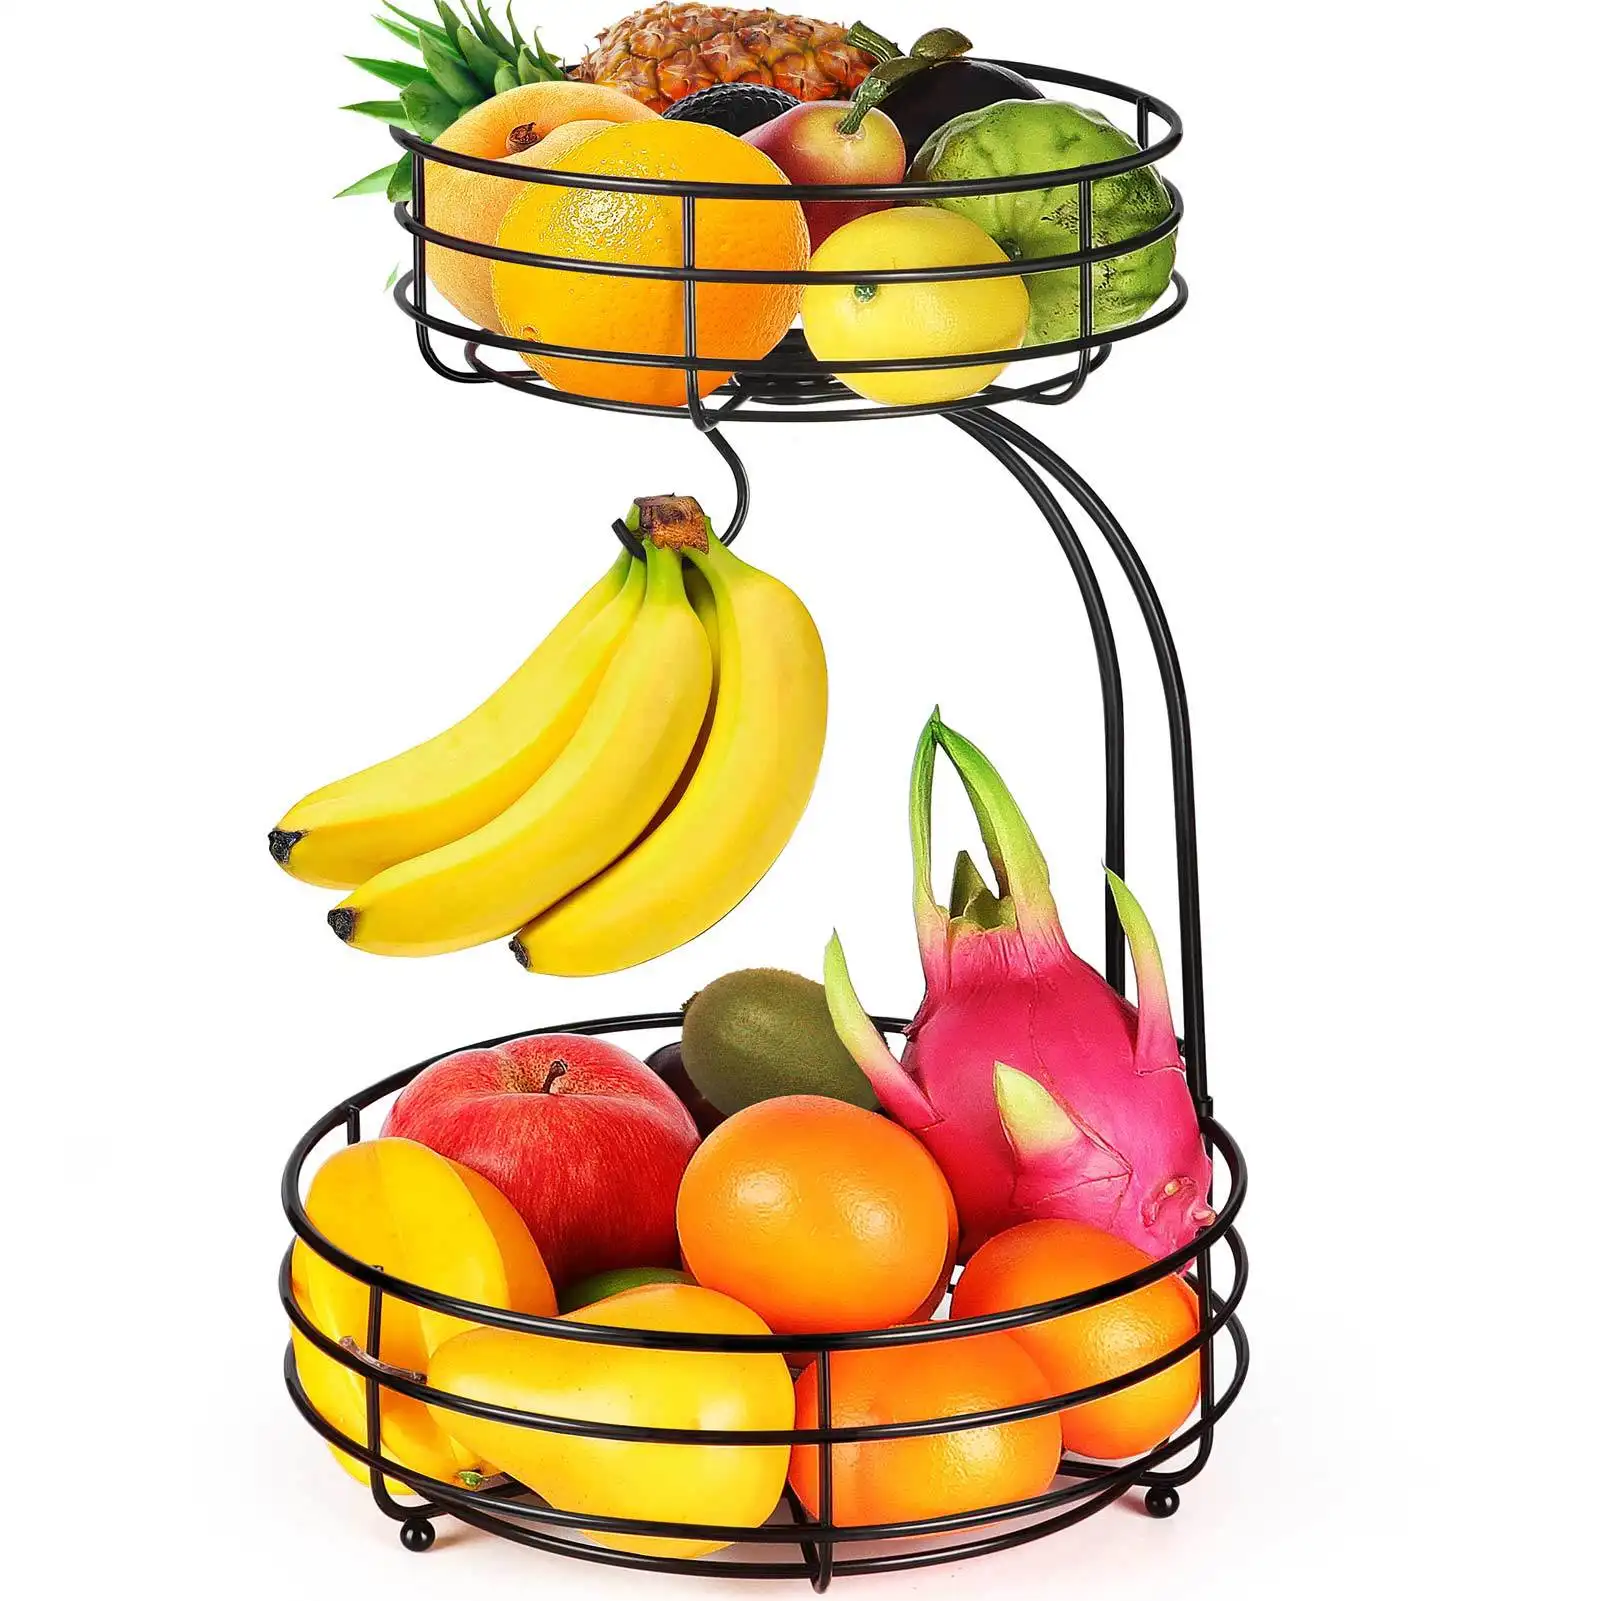 Venda quente 2-tier Bancada Frutas Legumes Cesta Tigela De Armazenamento Com Cabide De Banana